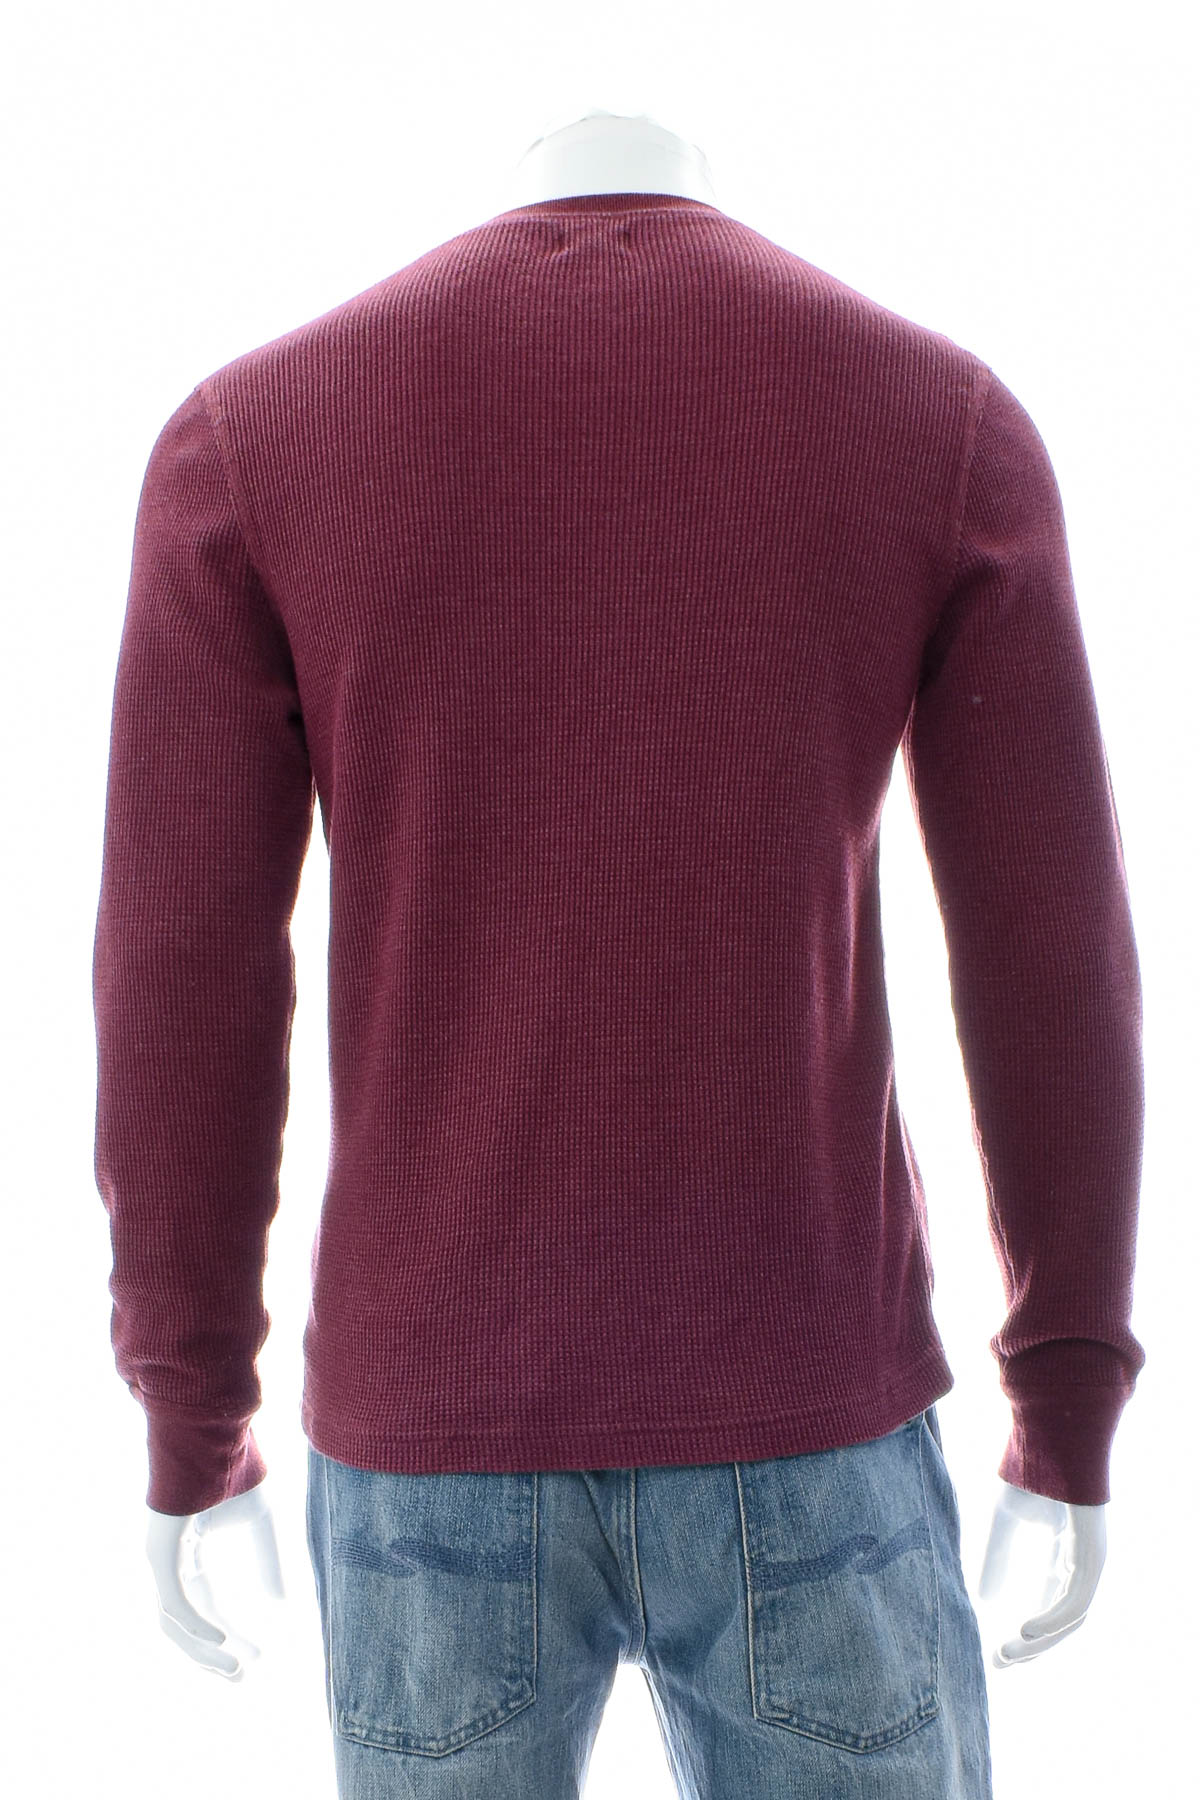 Men's sweater - J.Crew - 1